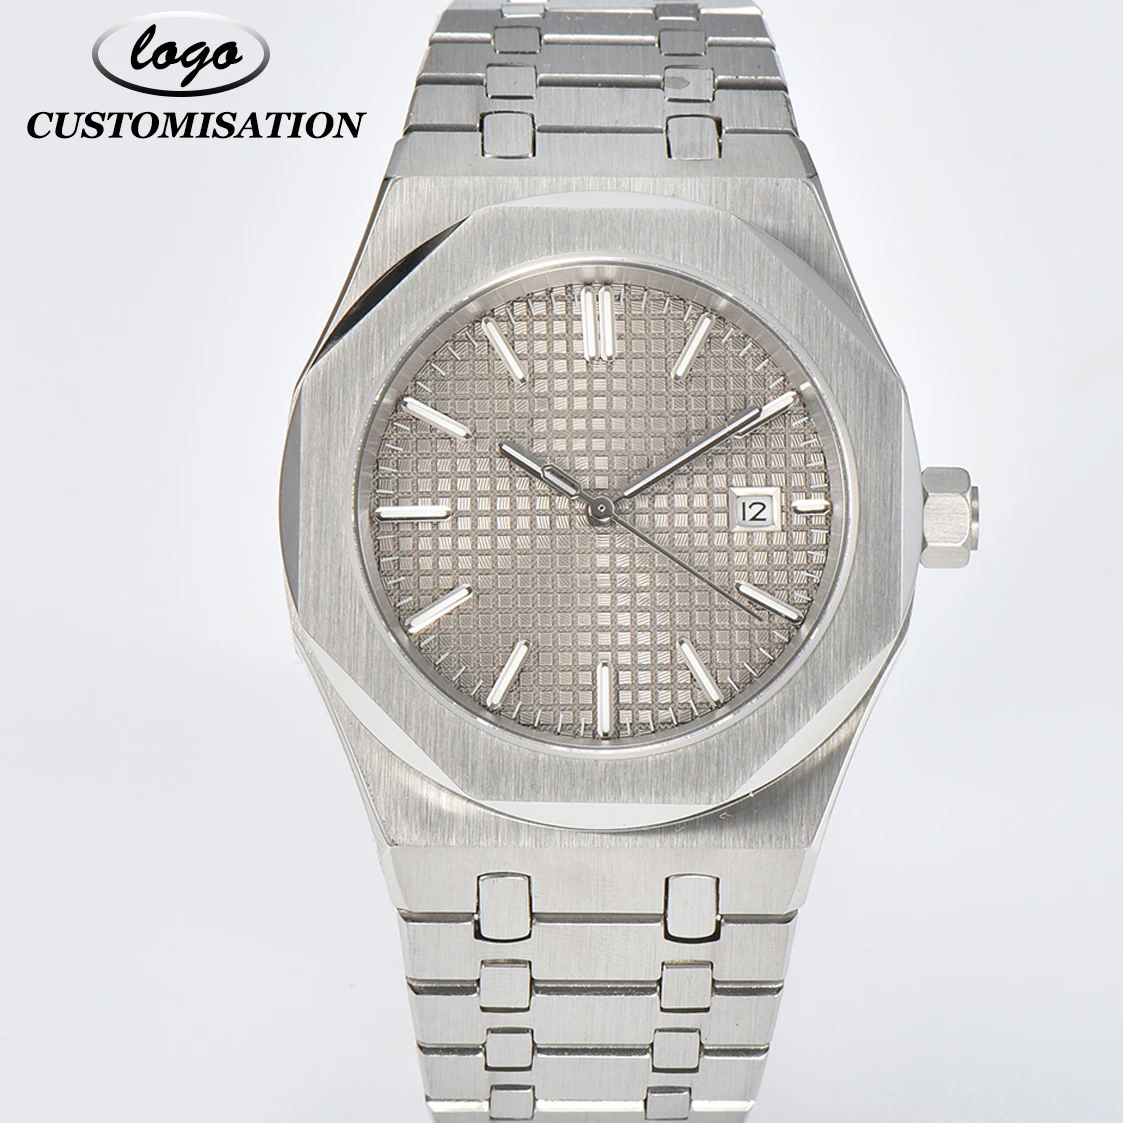 

Customised LOGO 42mm Miyota8215 Automatic Mechanical Watch Movement Stainless Steel Waterproof Luxury Men's Date Luminous Watch